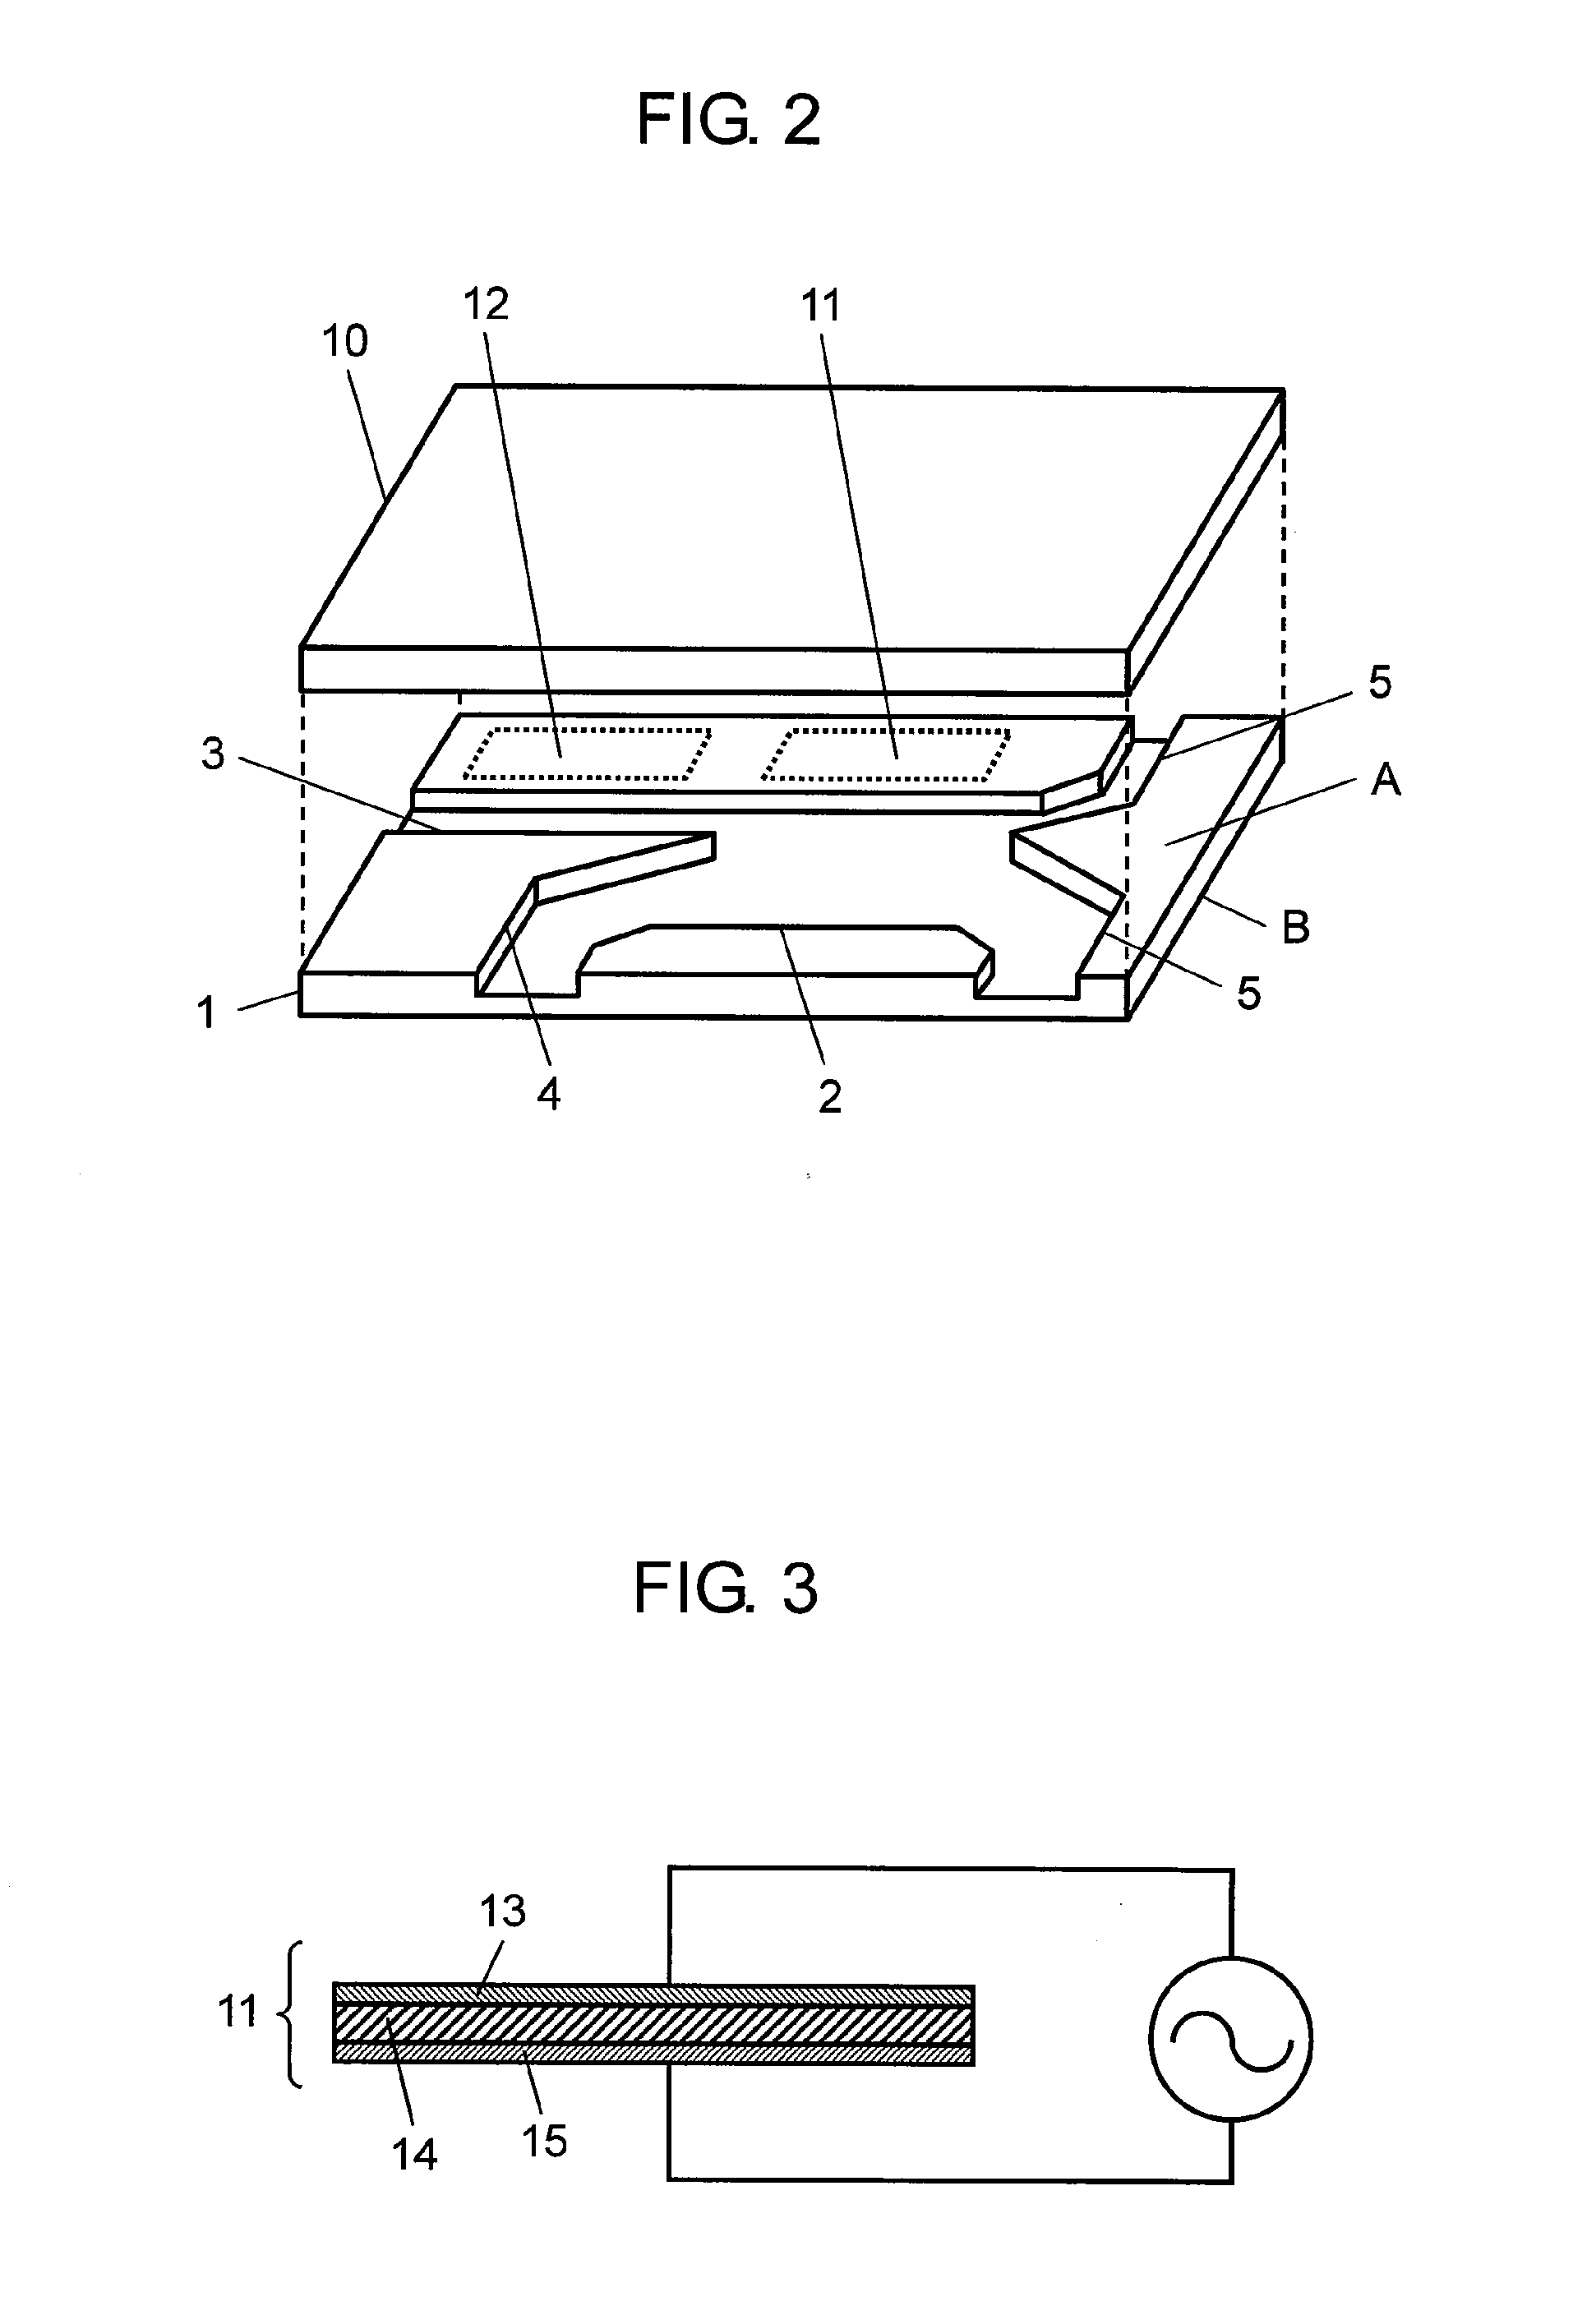 Component separation device